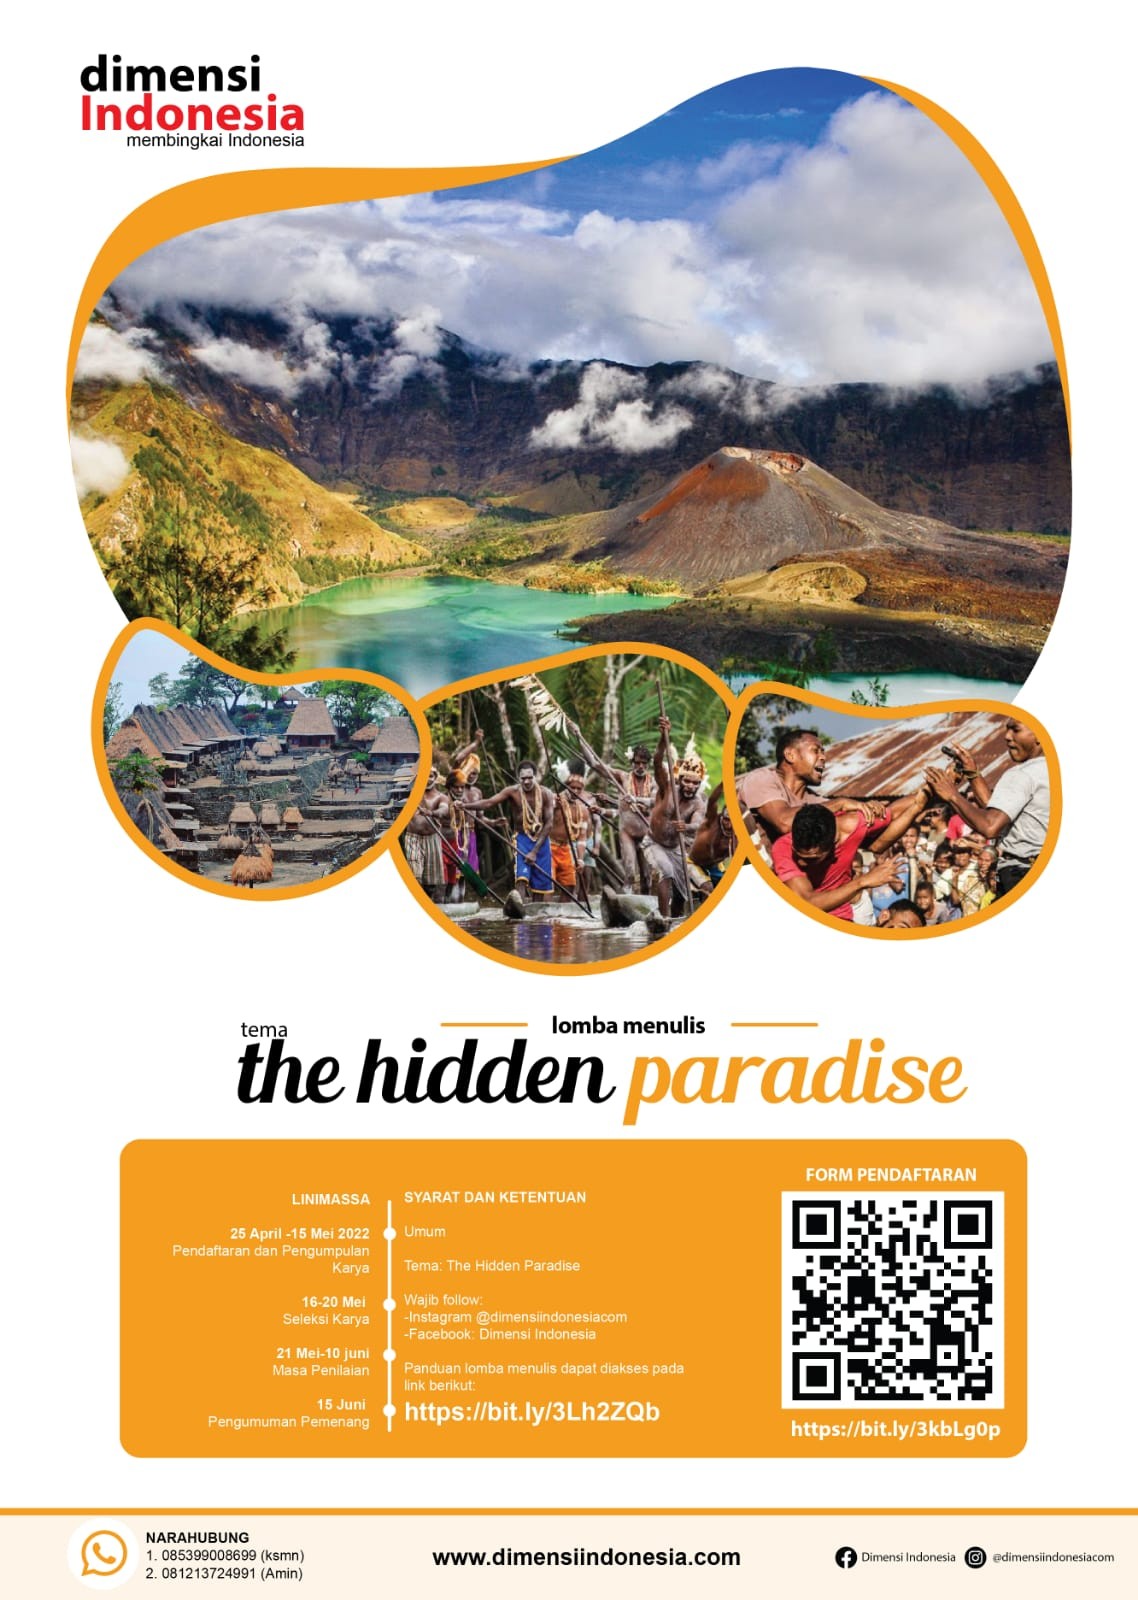 Dimensi Indonesia Gelar Lomba Menulis Dengan Tema The Hidden Paradise 